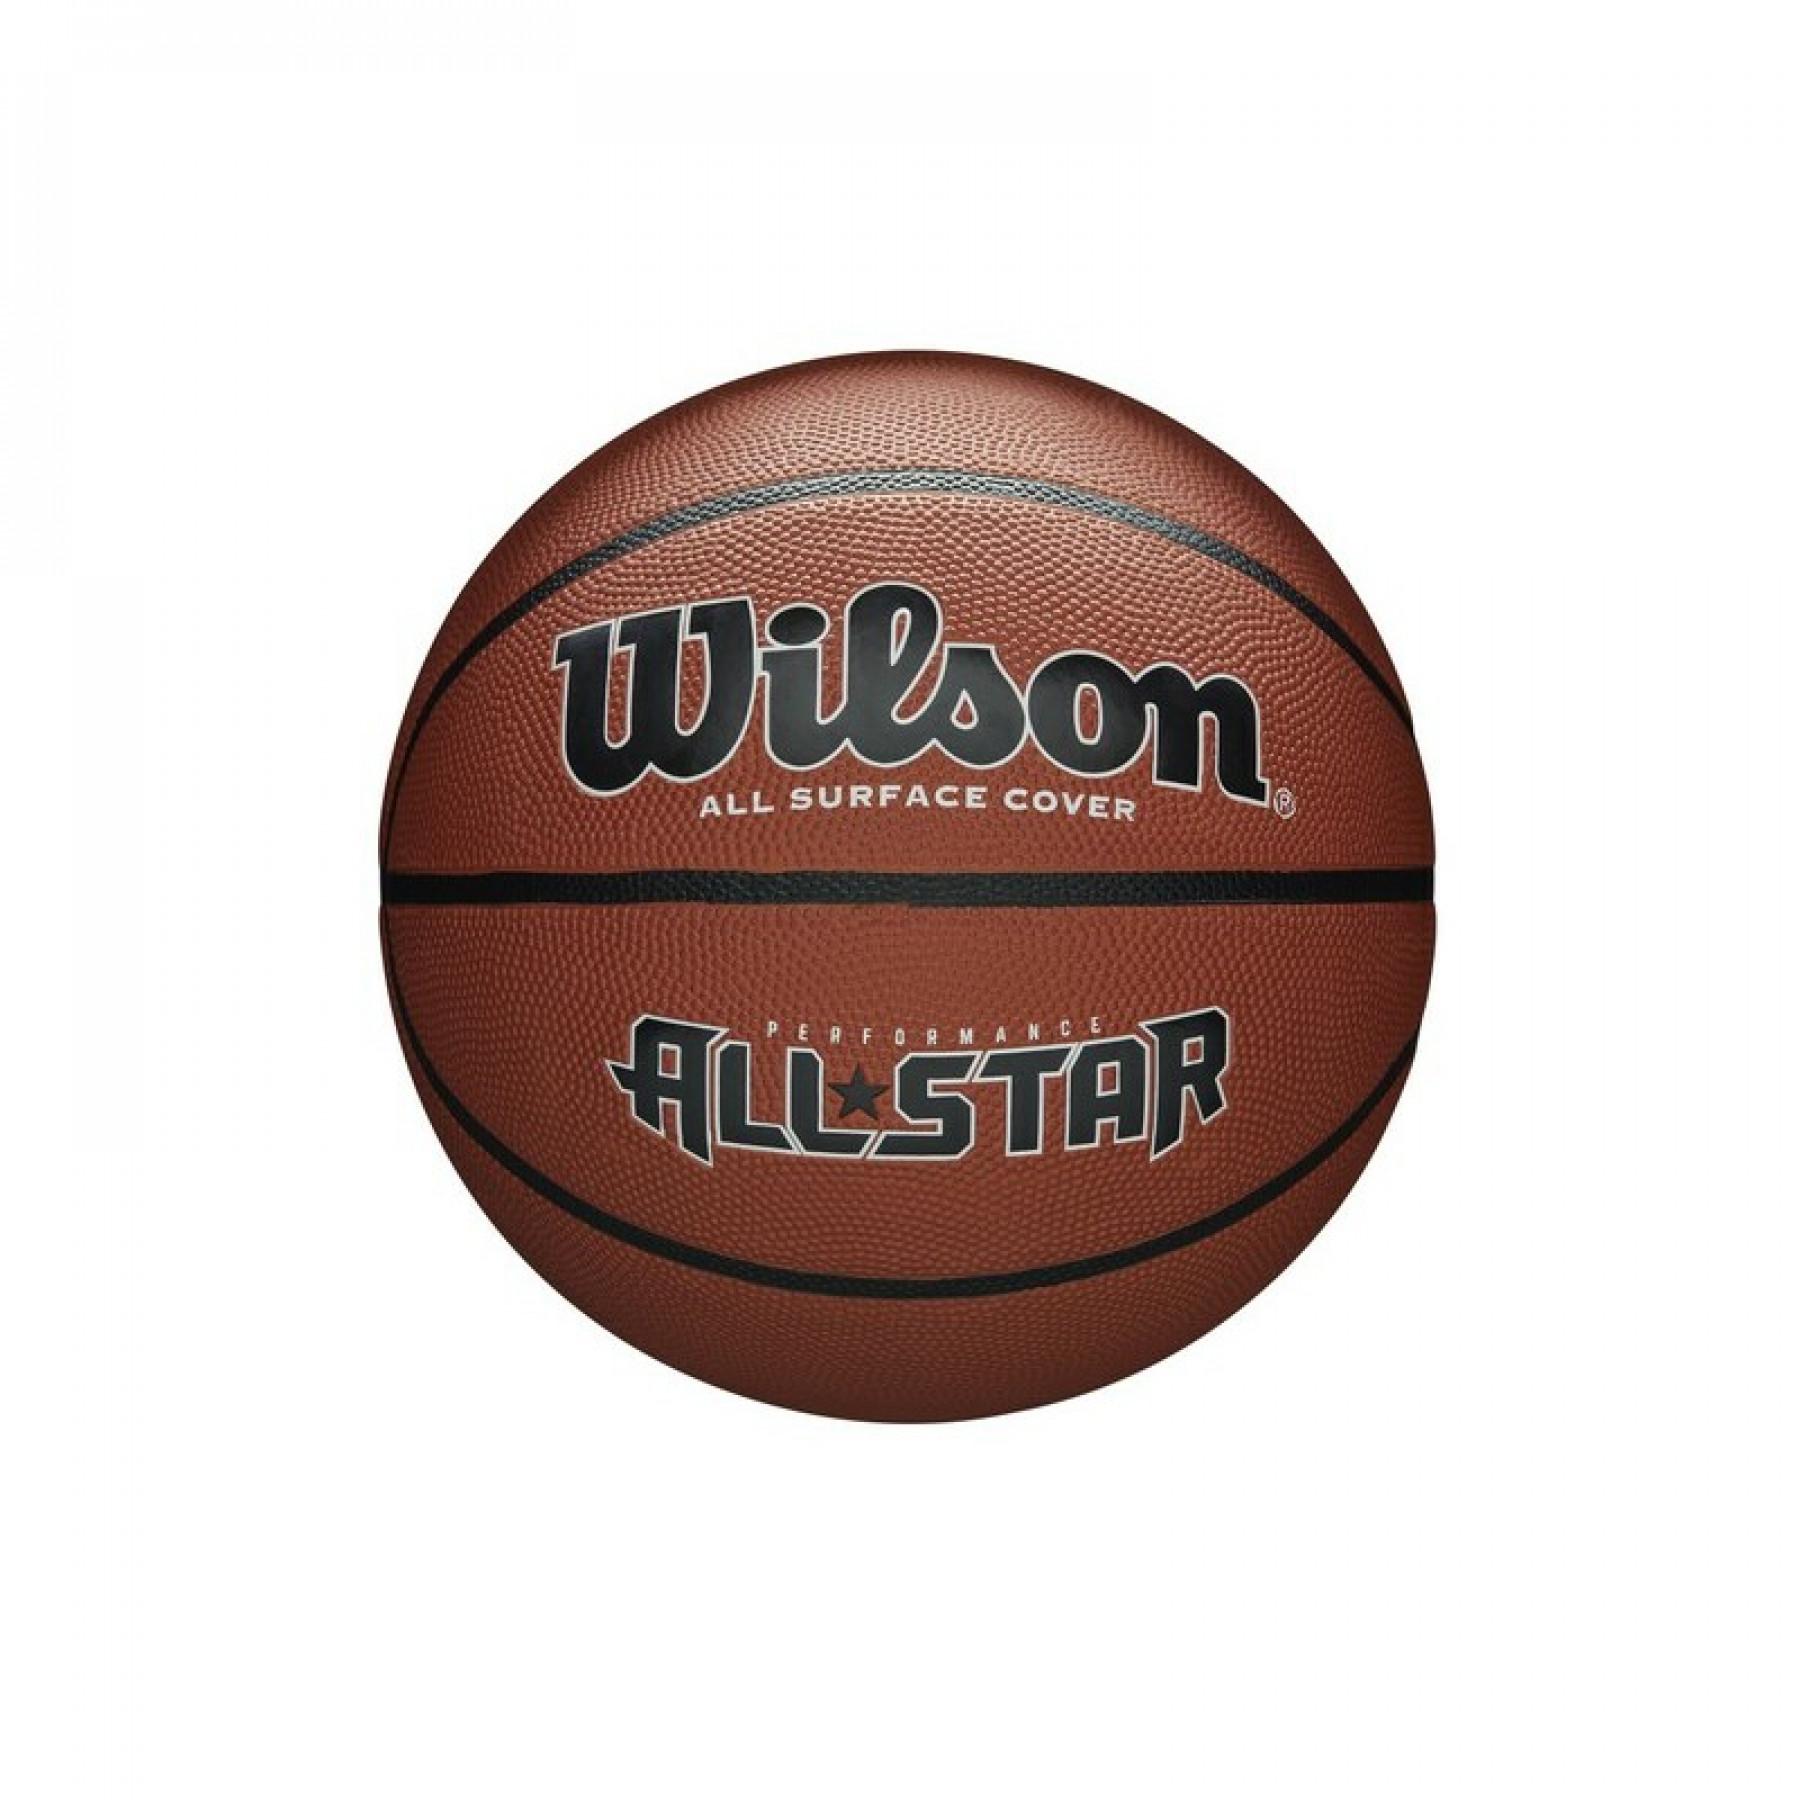 Ballon Wilson Performance All Star